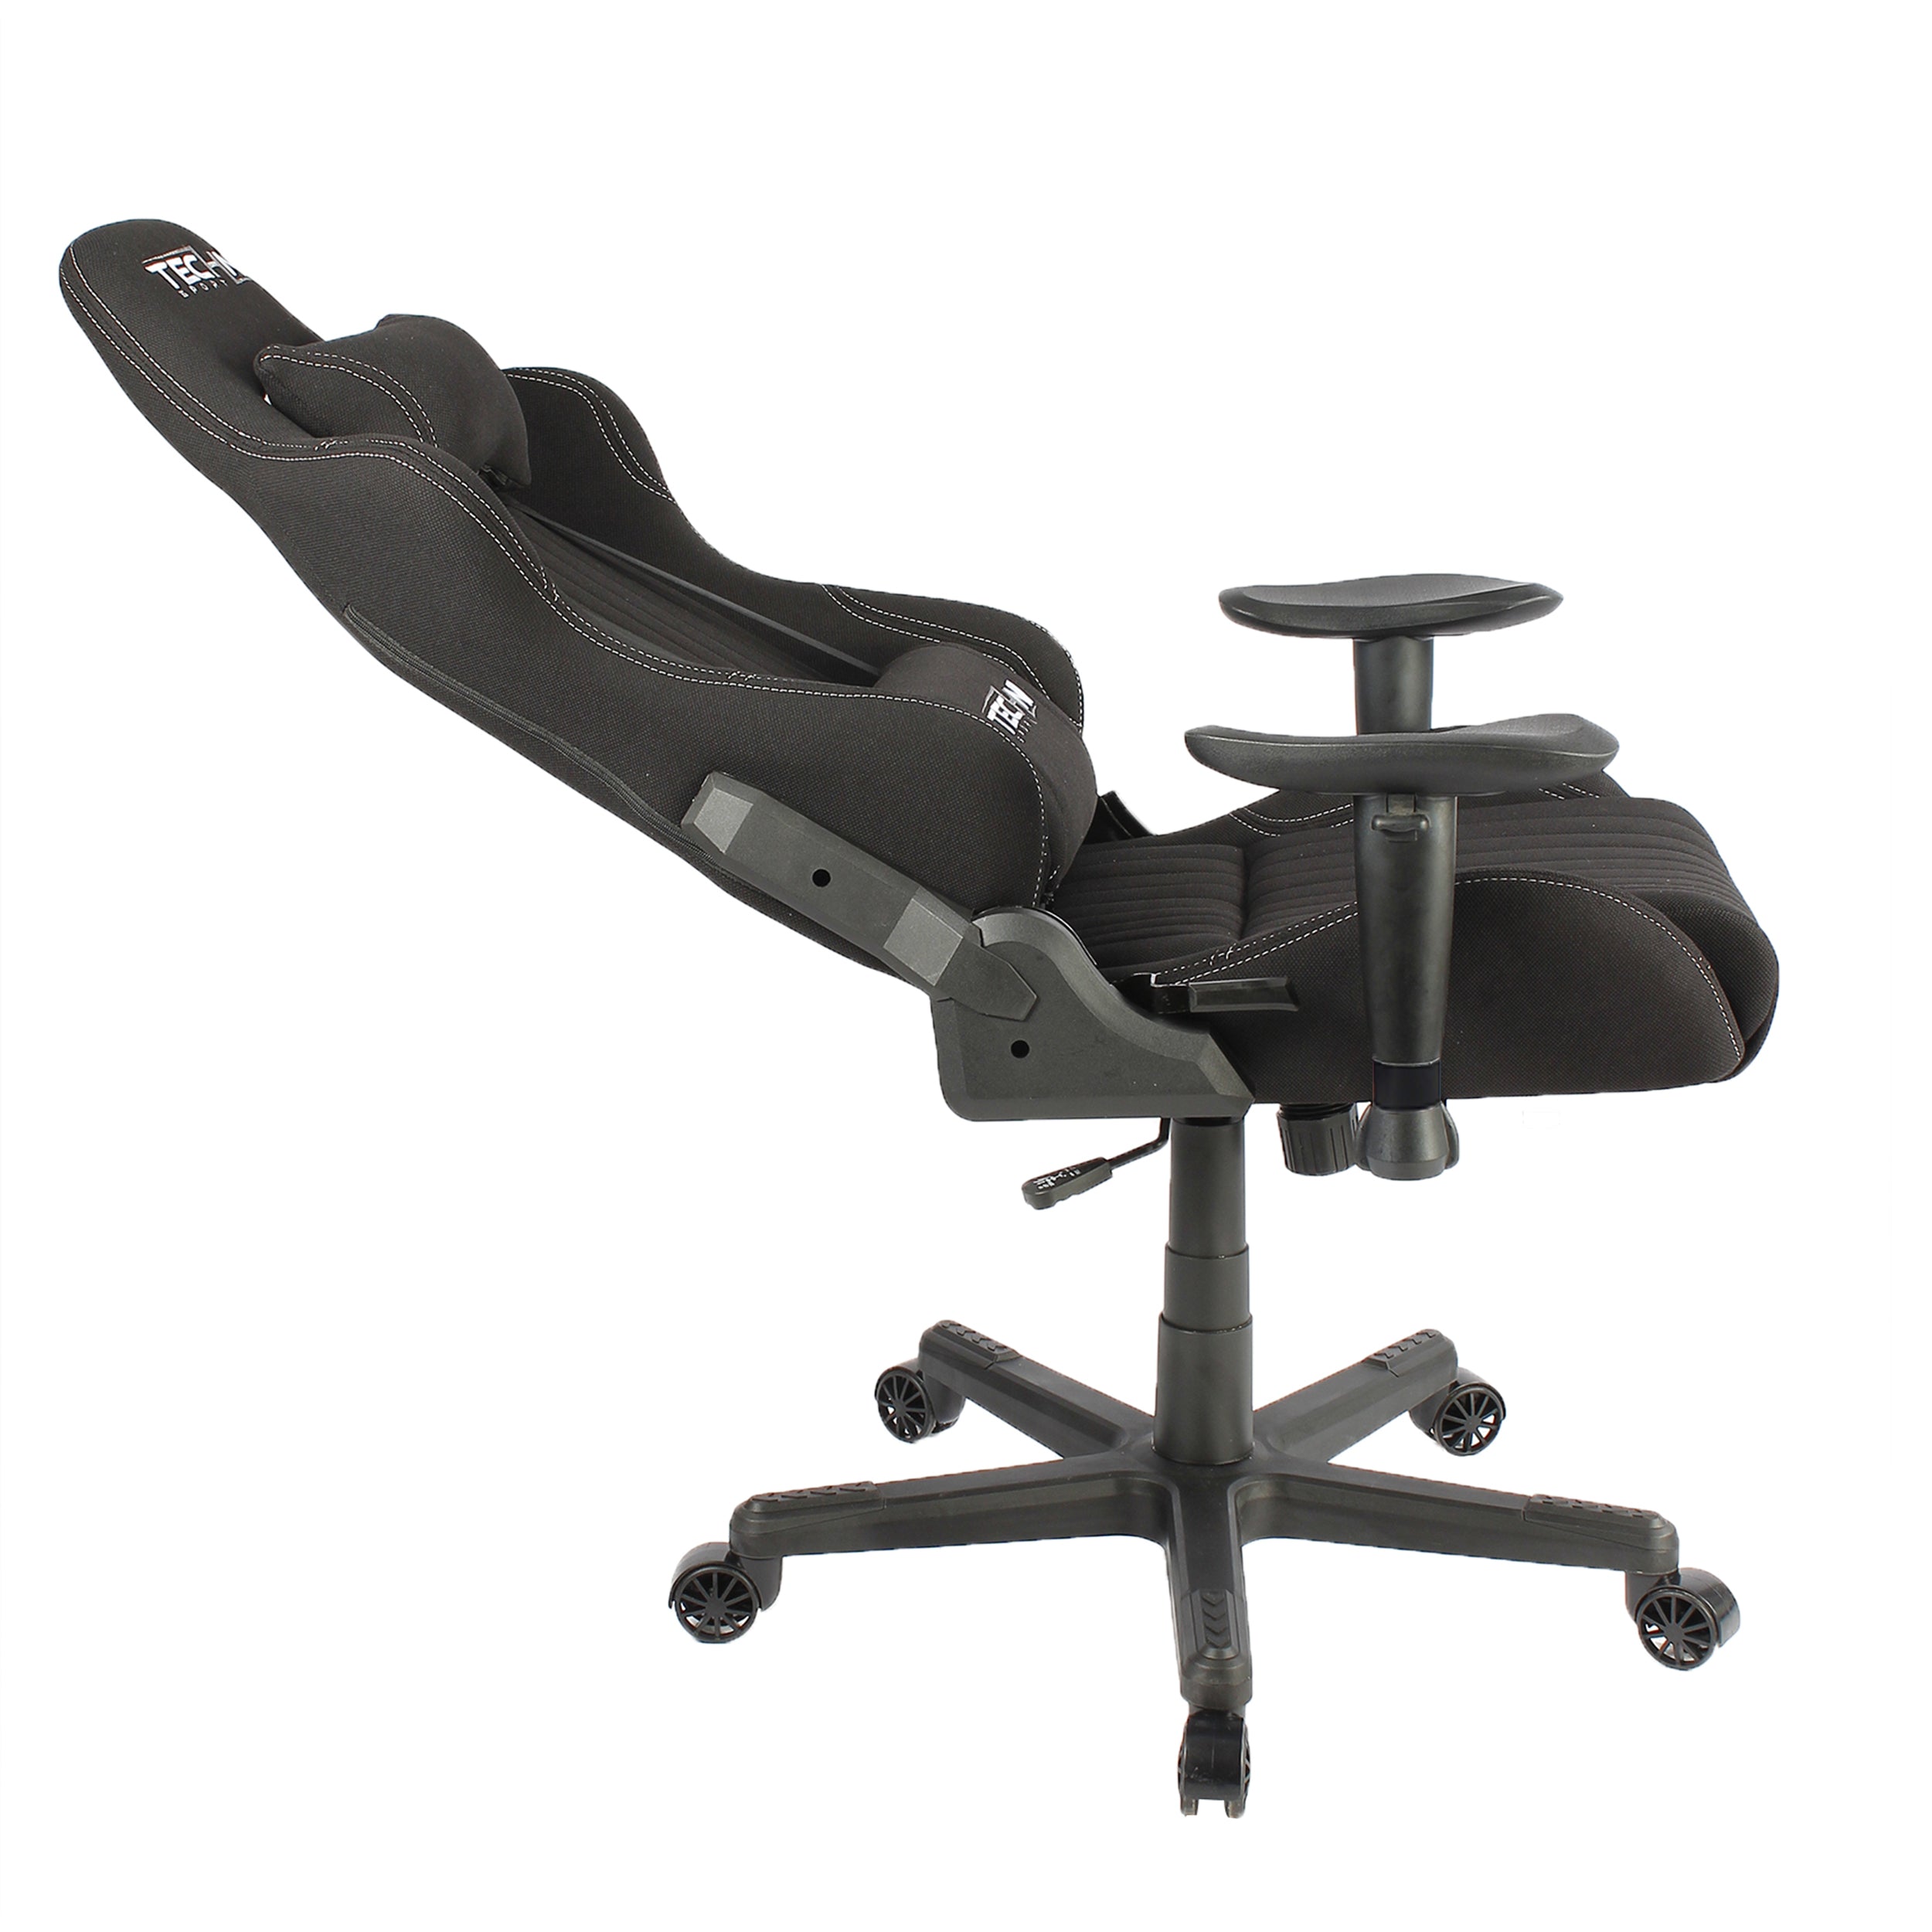 Techni Sport TS-F44 Fabric Ergonomic High Back Racer Style Gaming Chair (Black)